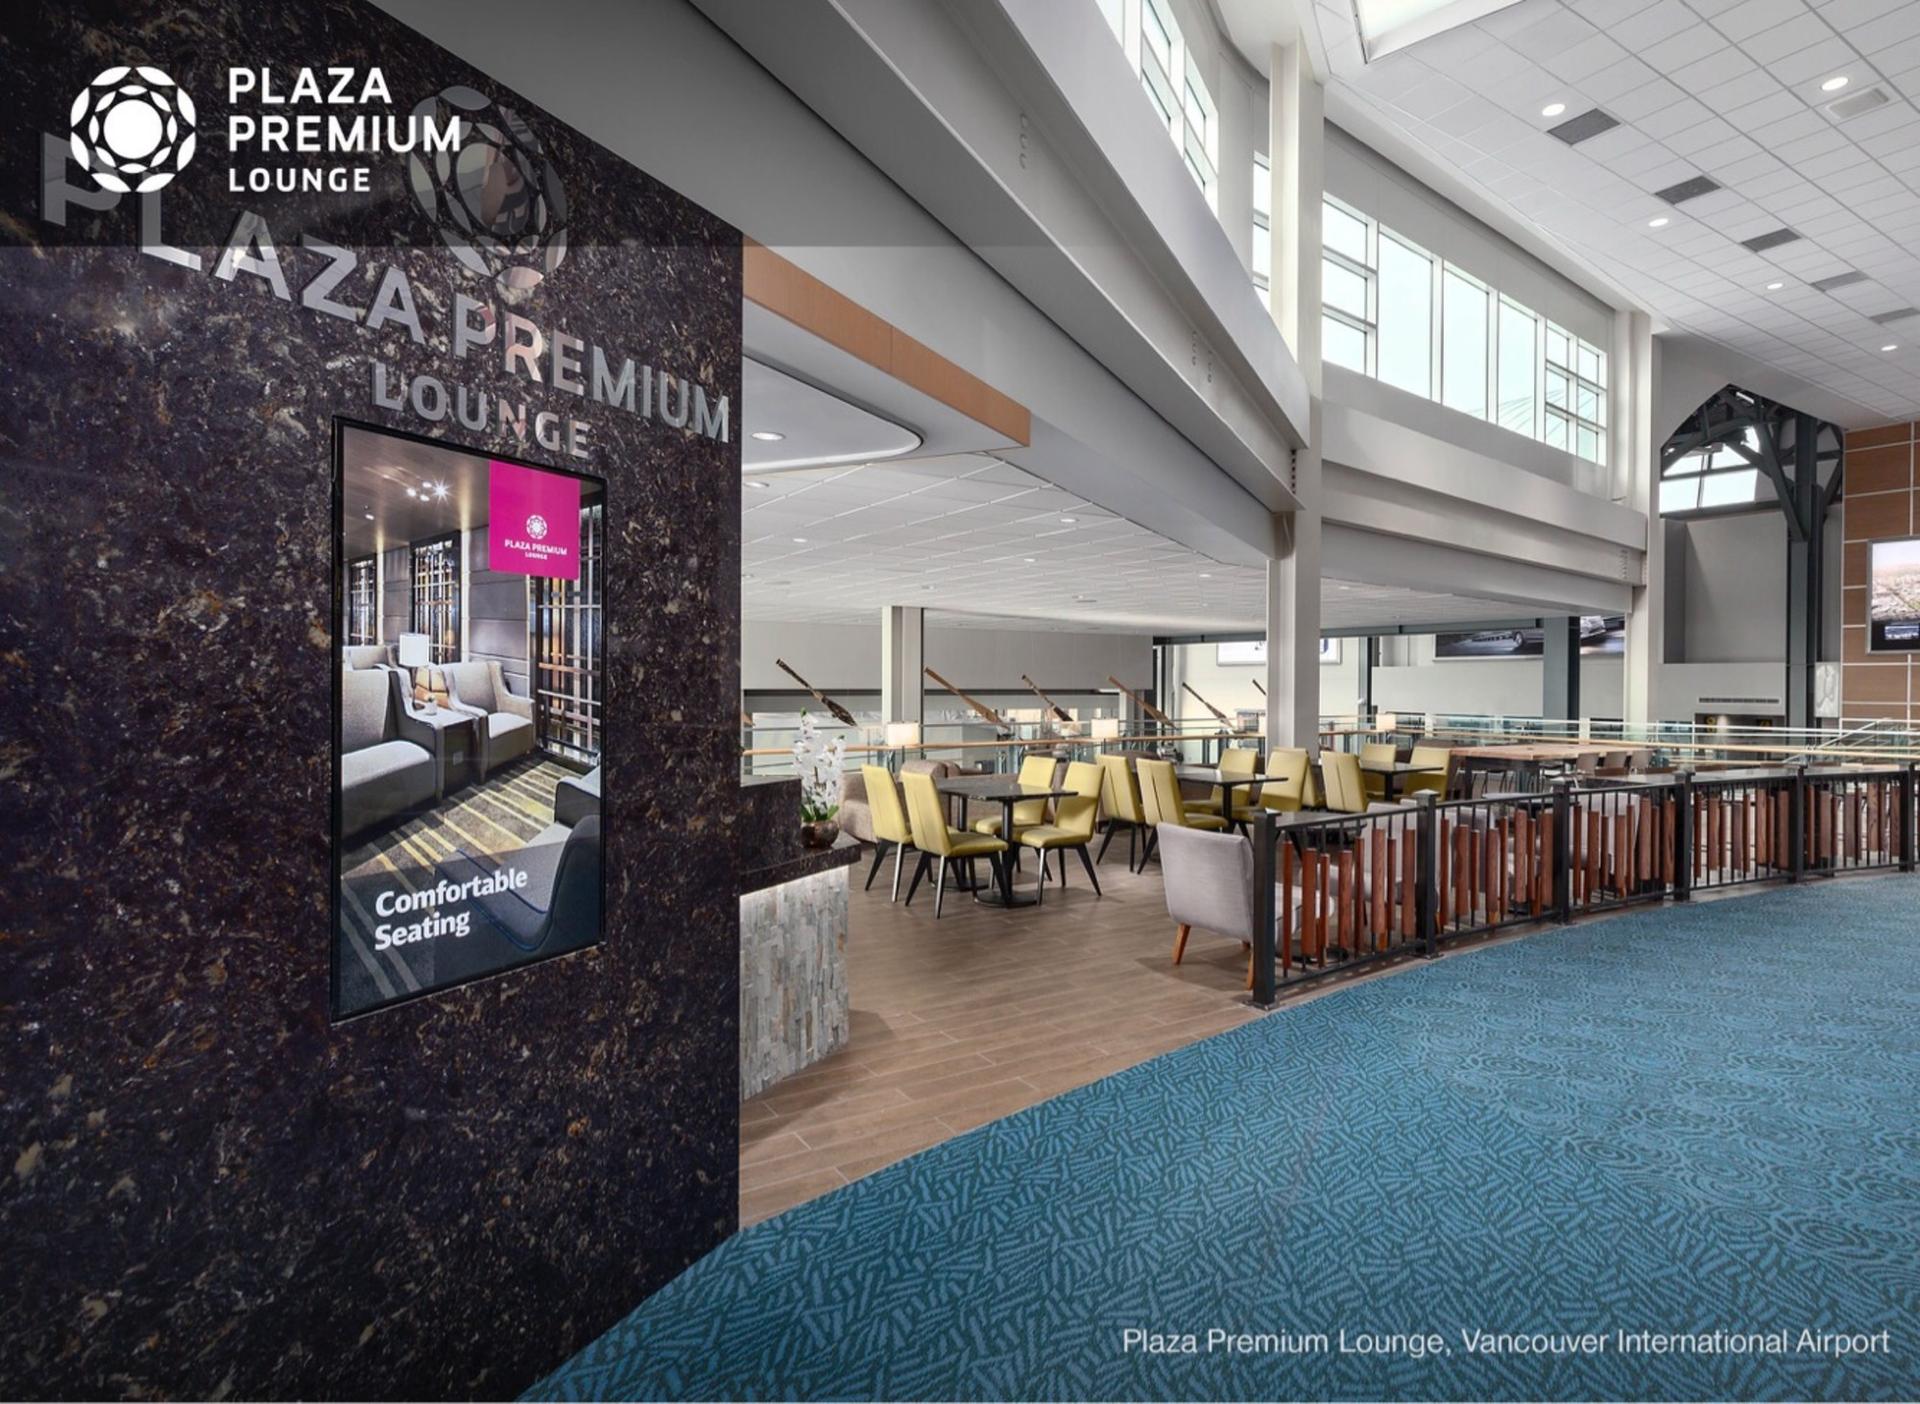 Plaza Premium Lounge (Domestic Gate C29) image 12 of 17